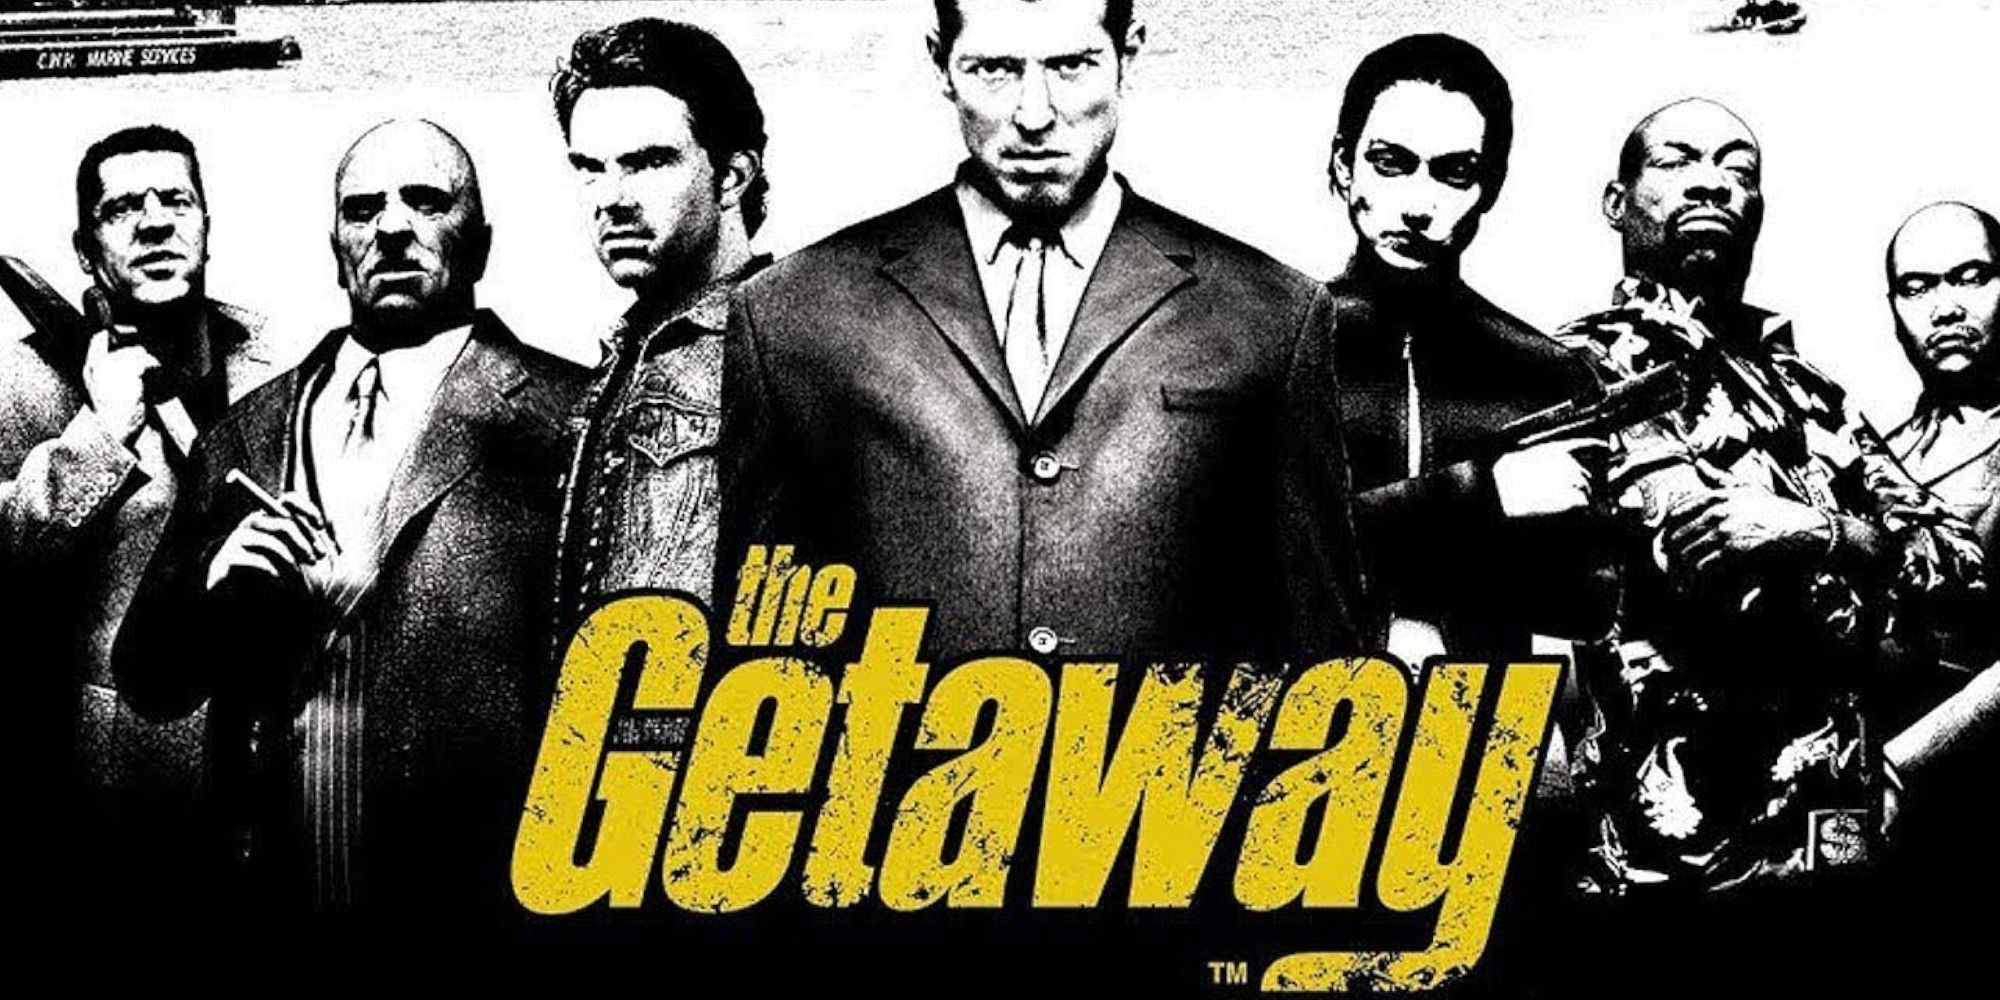 the gang leaders of the getaway pose